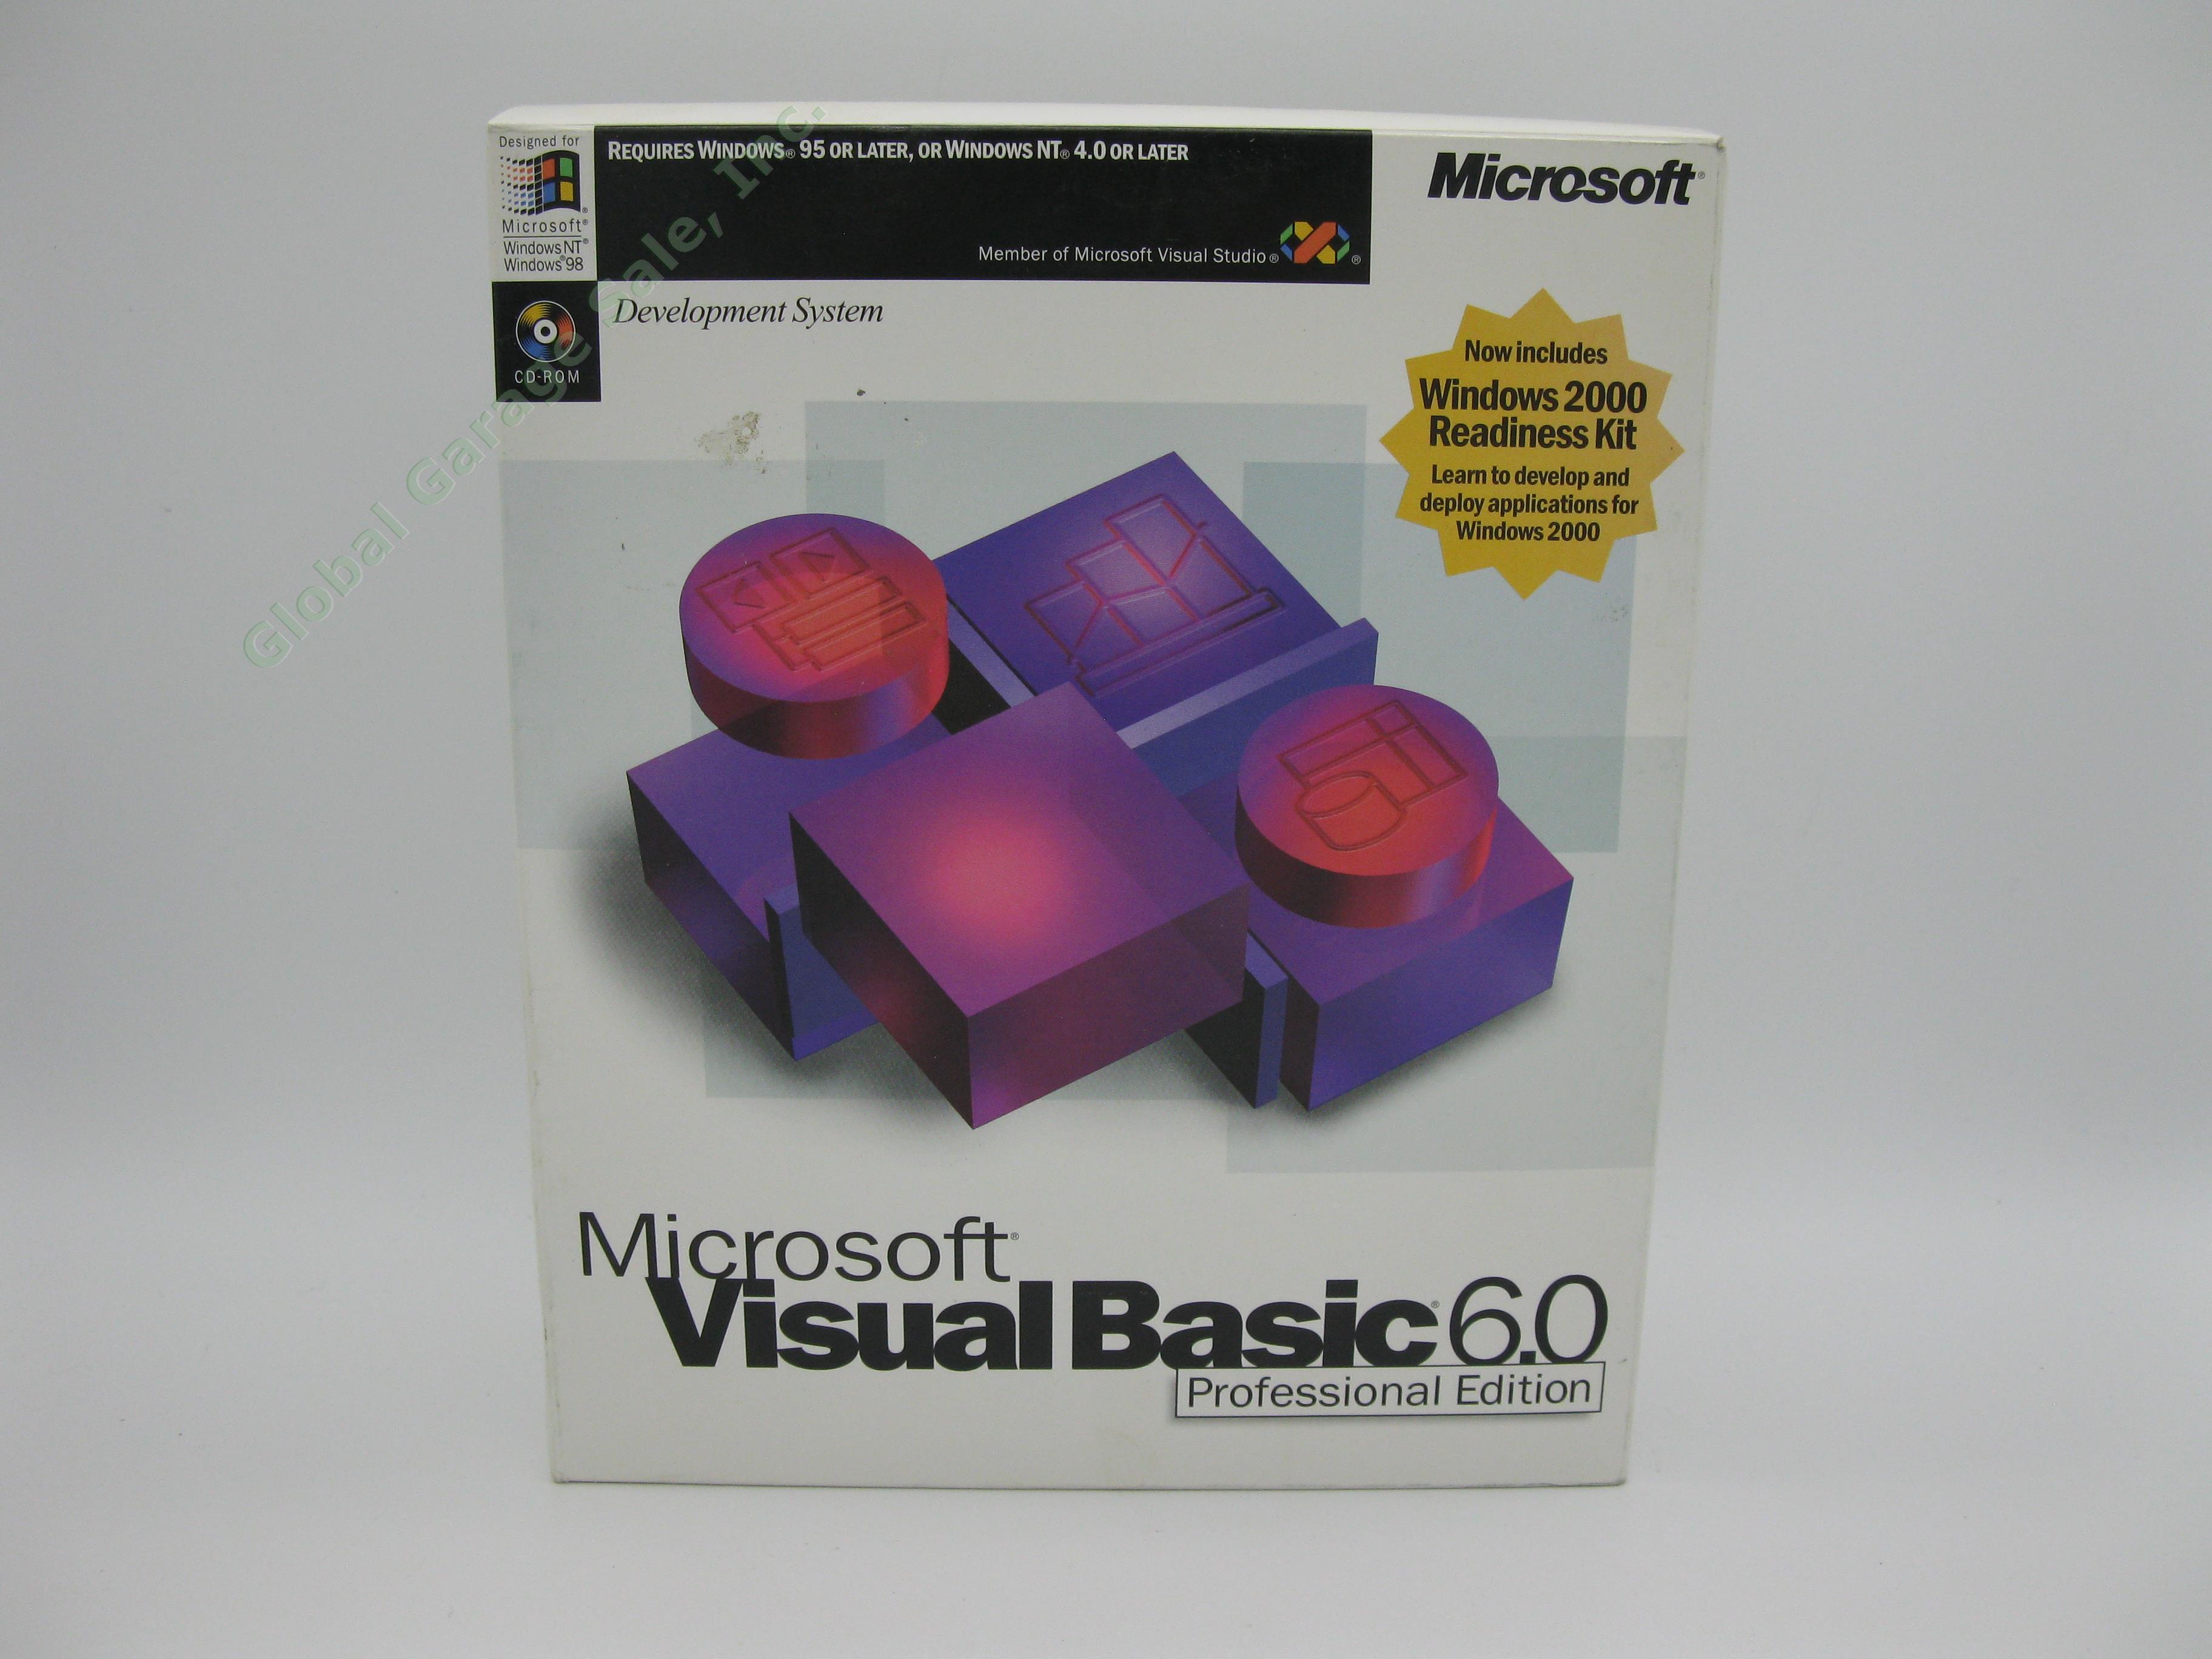 Microsoft Visual Basic 6.0 Professional Edition Pro Full Retail Box Commercial